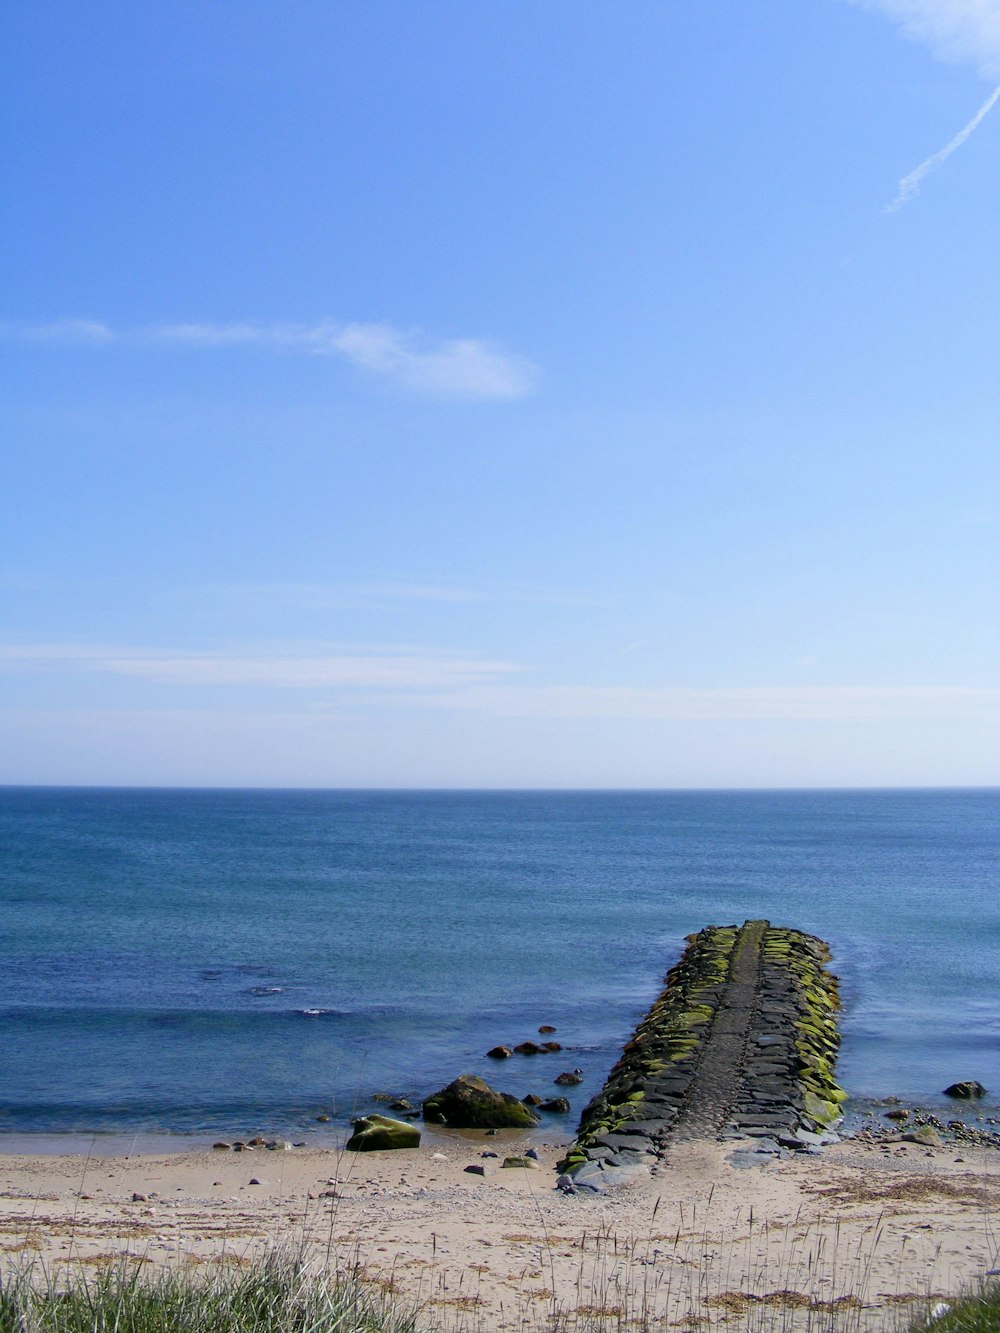 una panchina seduta in cima a una spiaggia sabbiosa vicino all'oceano